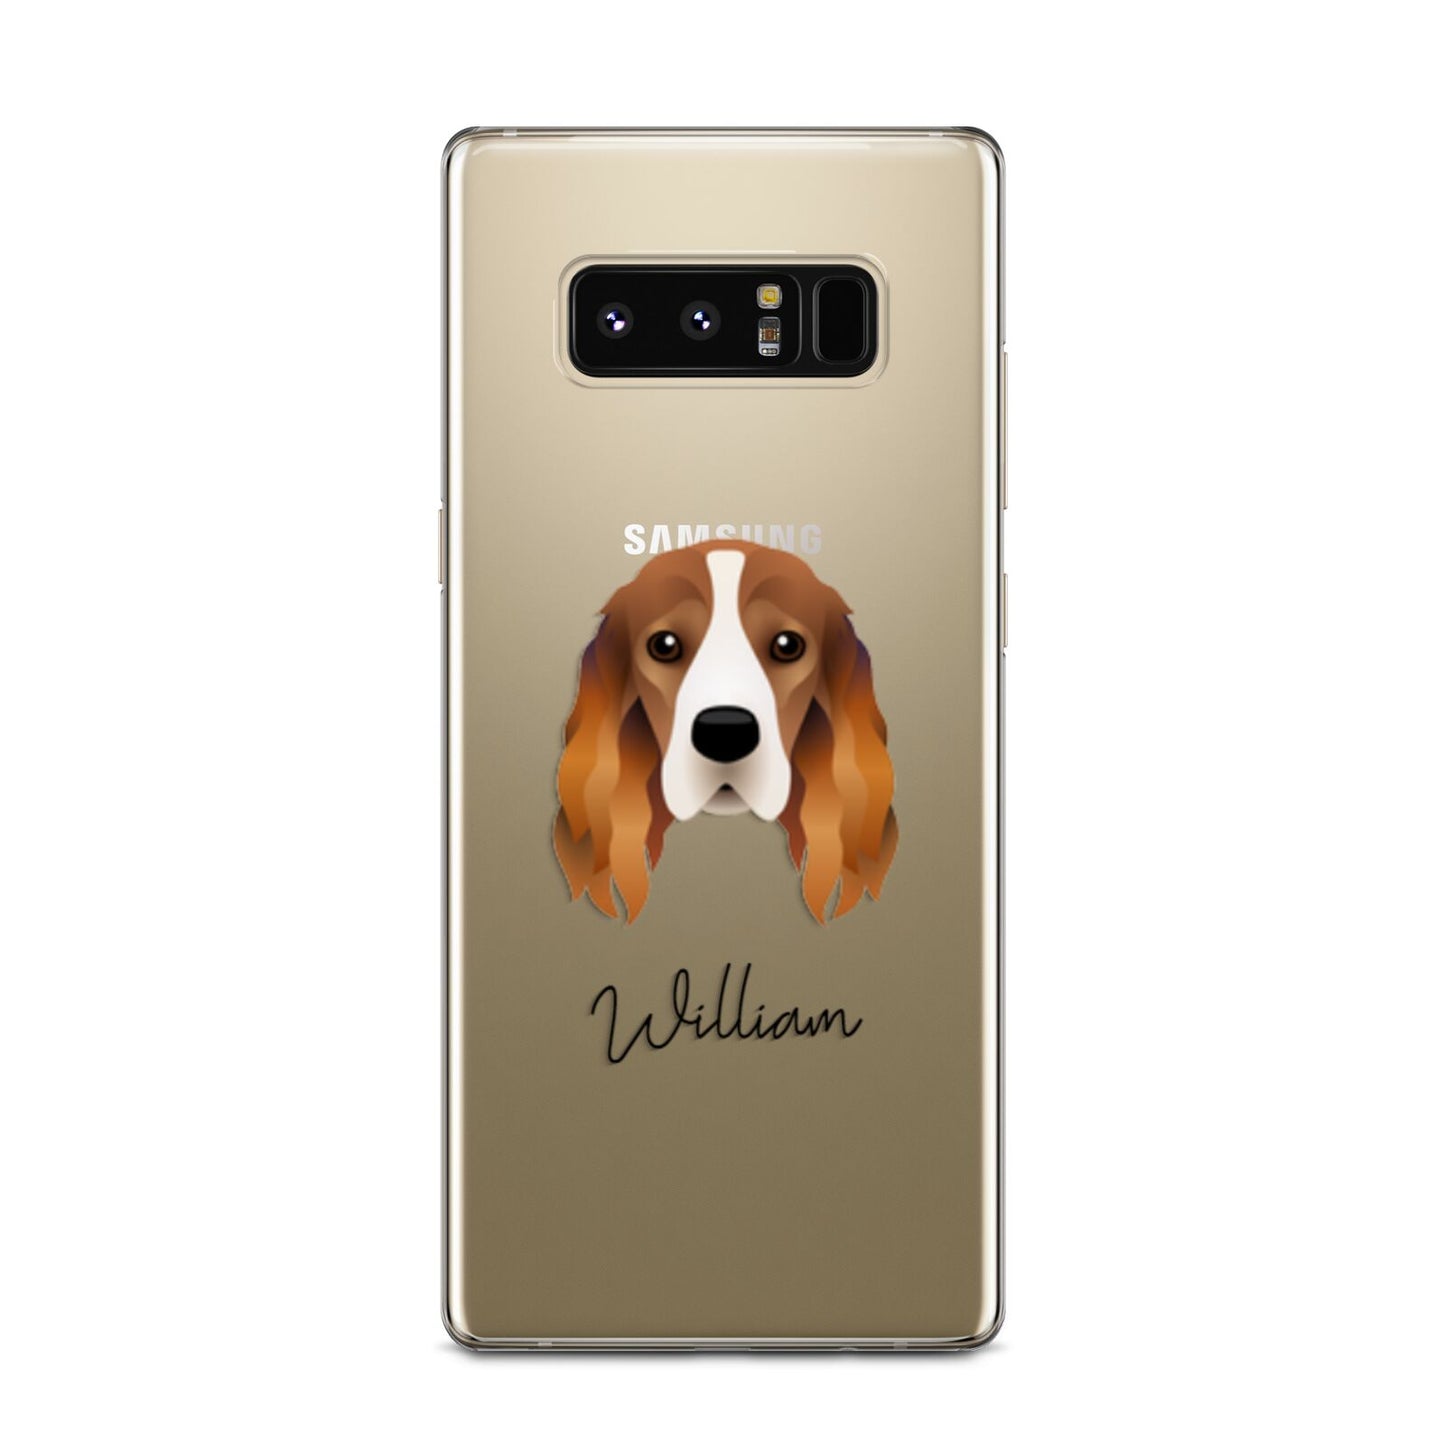 Cocker Spaniel Personalised Samsung Galaxy Note 8 Case